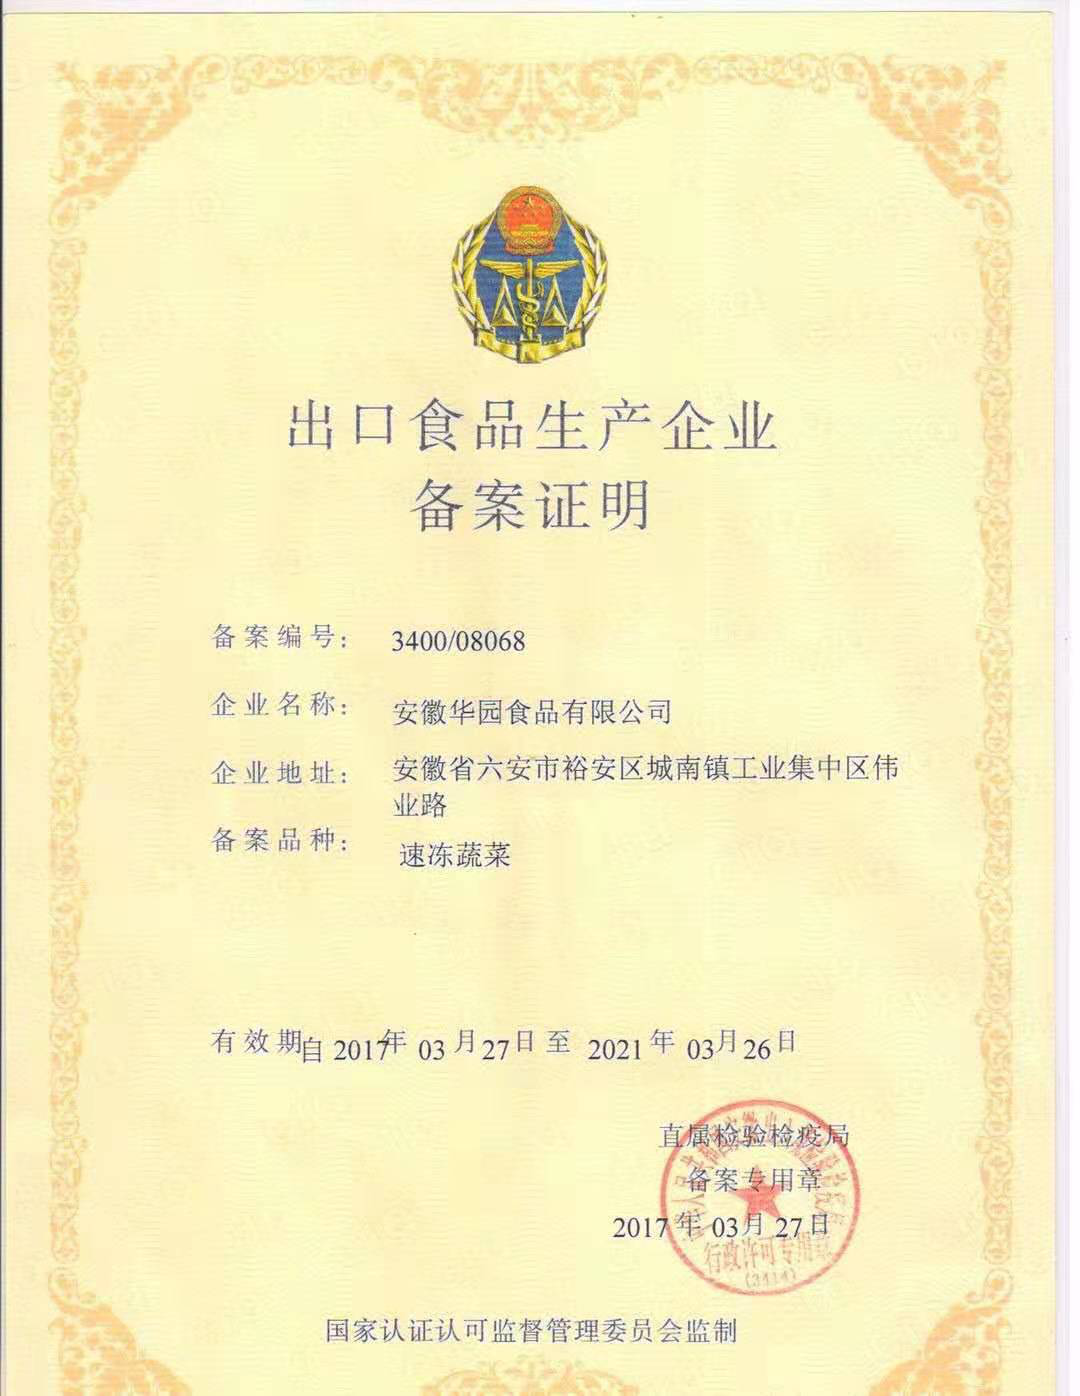 professional certificates.